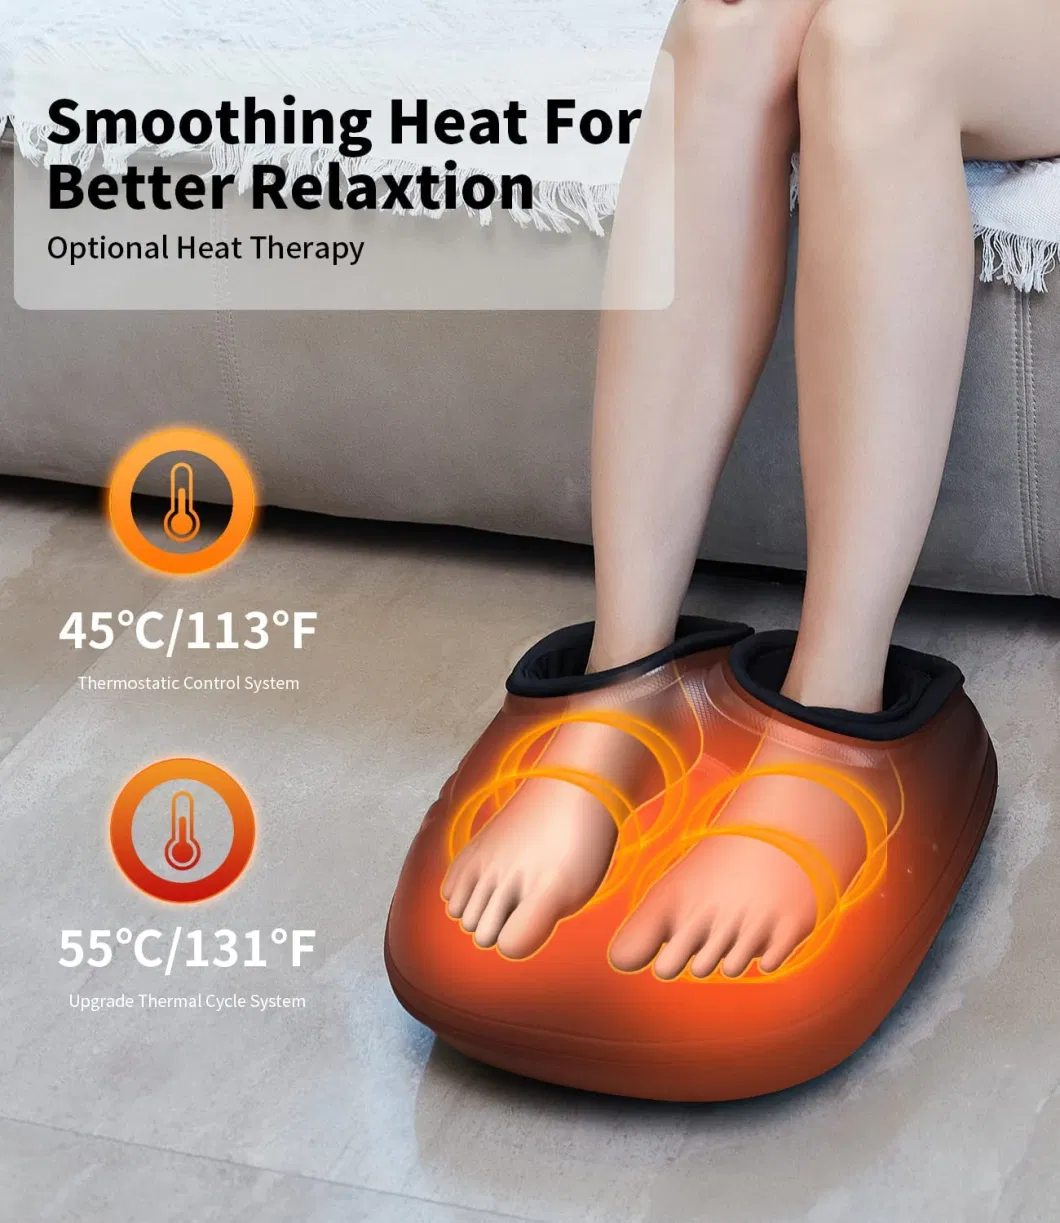 Foot Massager-Shiatsu Foot Massager Machine W/ Heat &amp; Remote 5-in-1 Reflexology System-Kneading, Rolling, Scraping